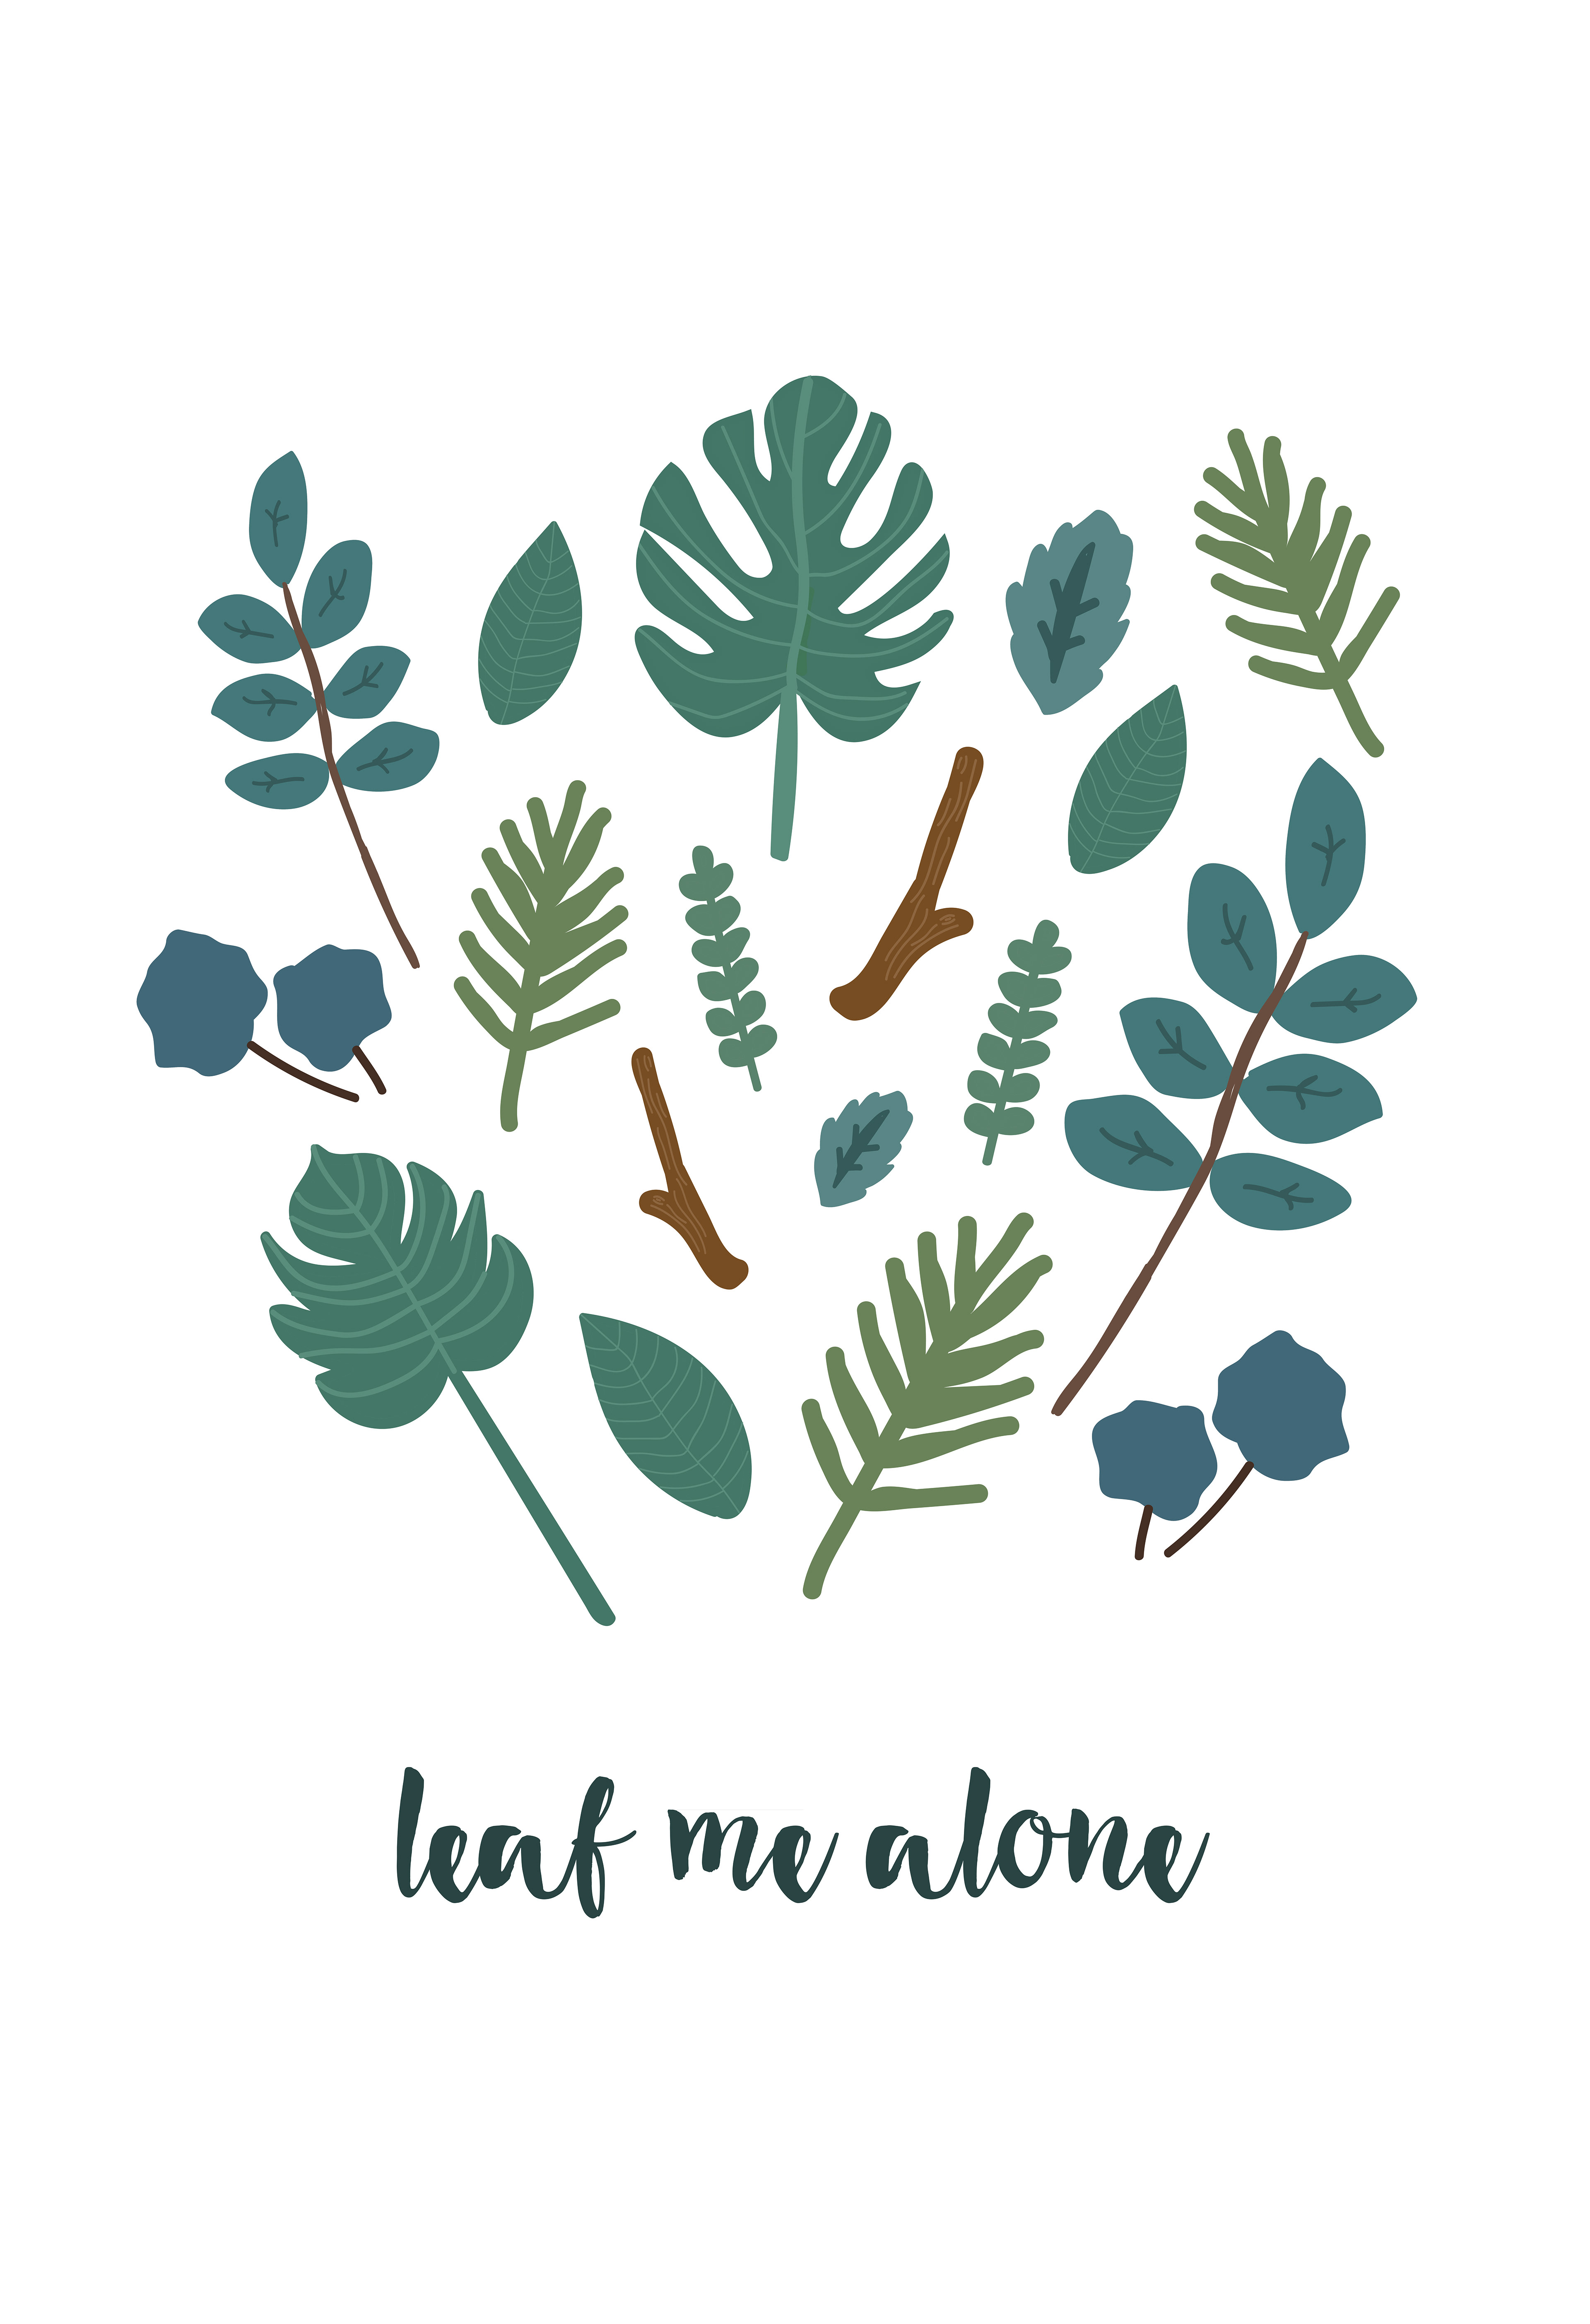 Kate Bennett Design Portfolio - Leaf me alone